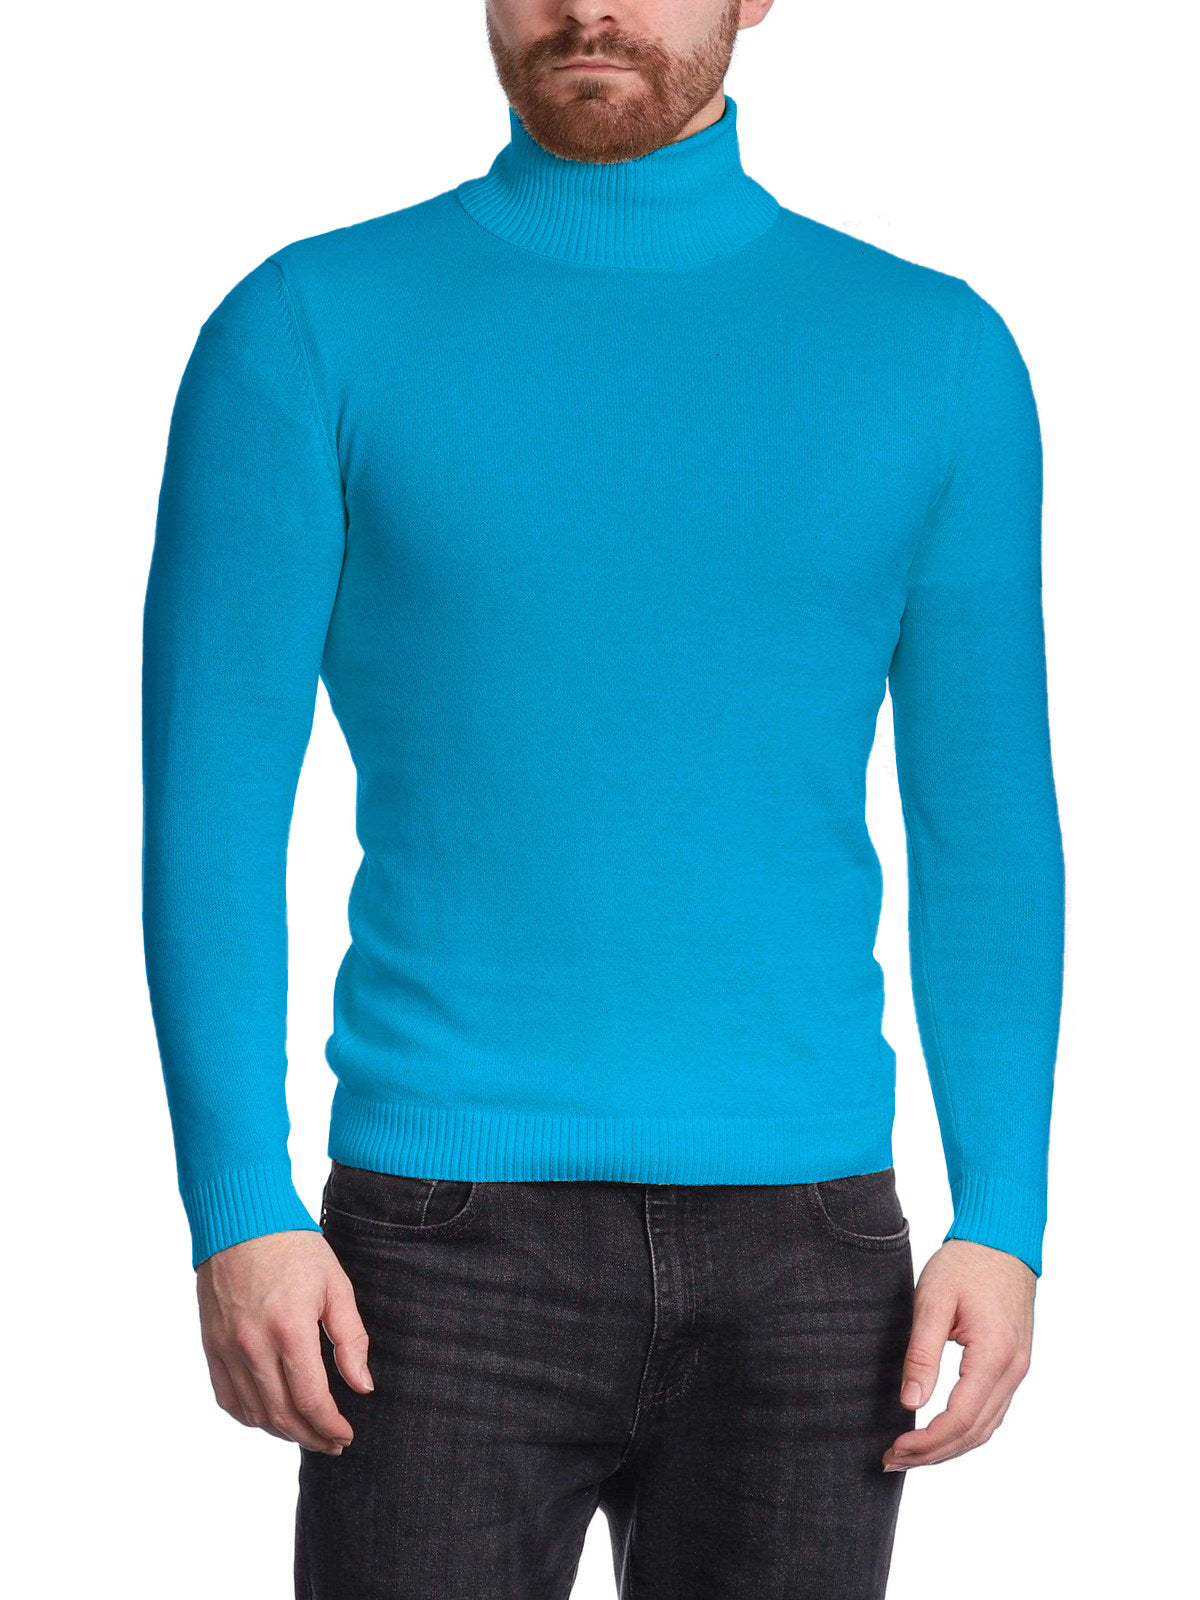 Arthur Black Men's Caribbean Blue Pullover Cotton Blend Turtleneck Sweater Shirt